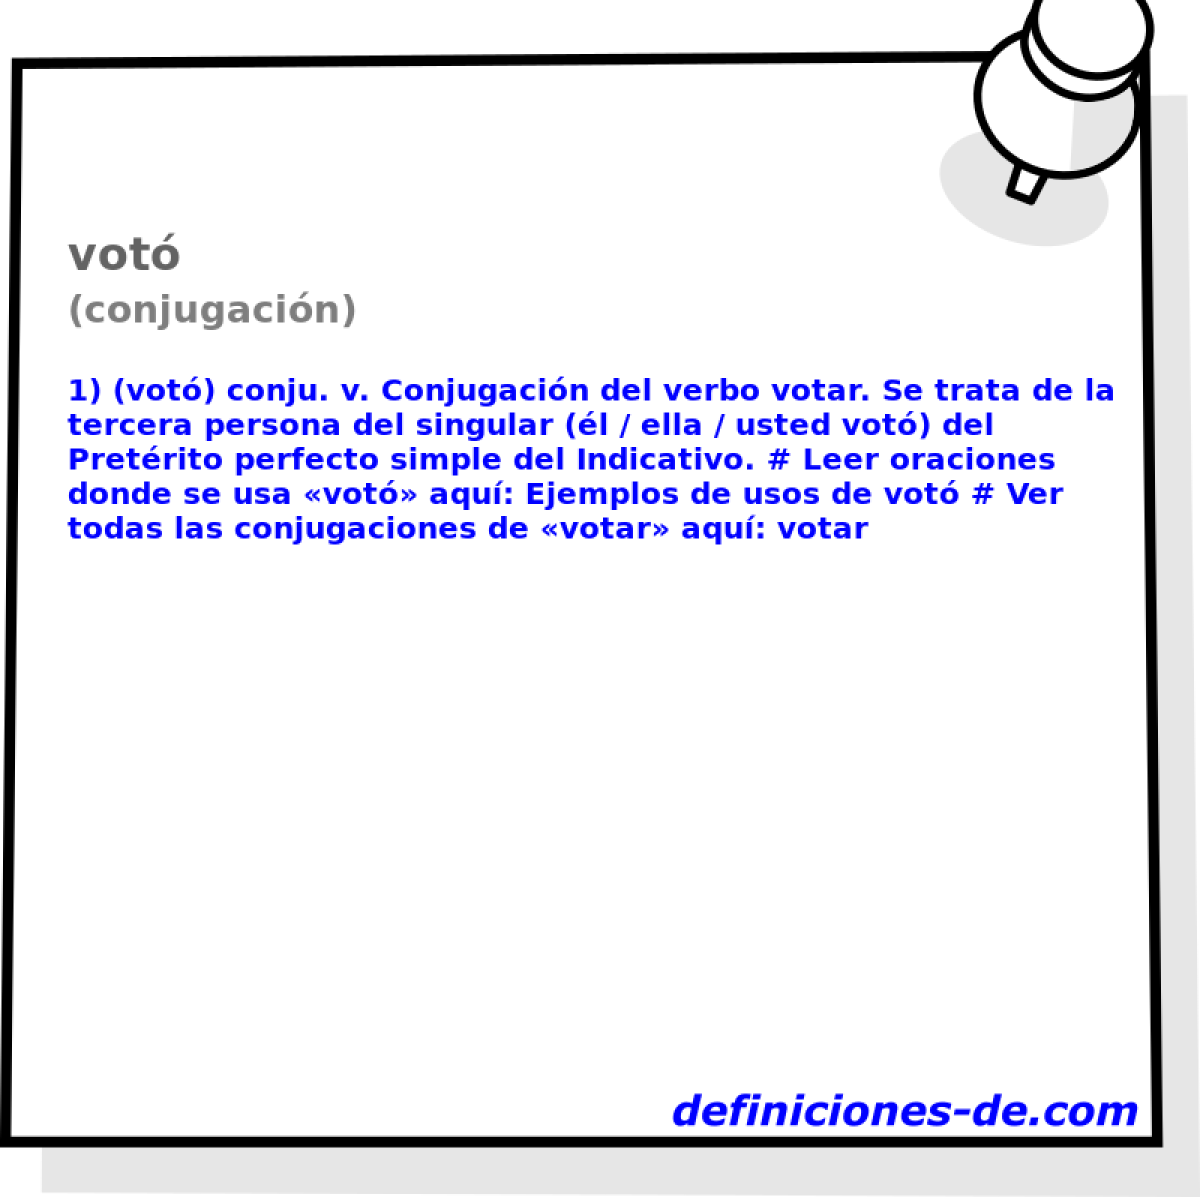 vot (conjugacin)